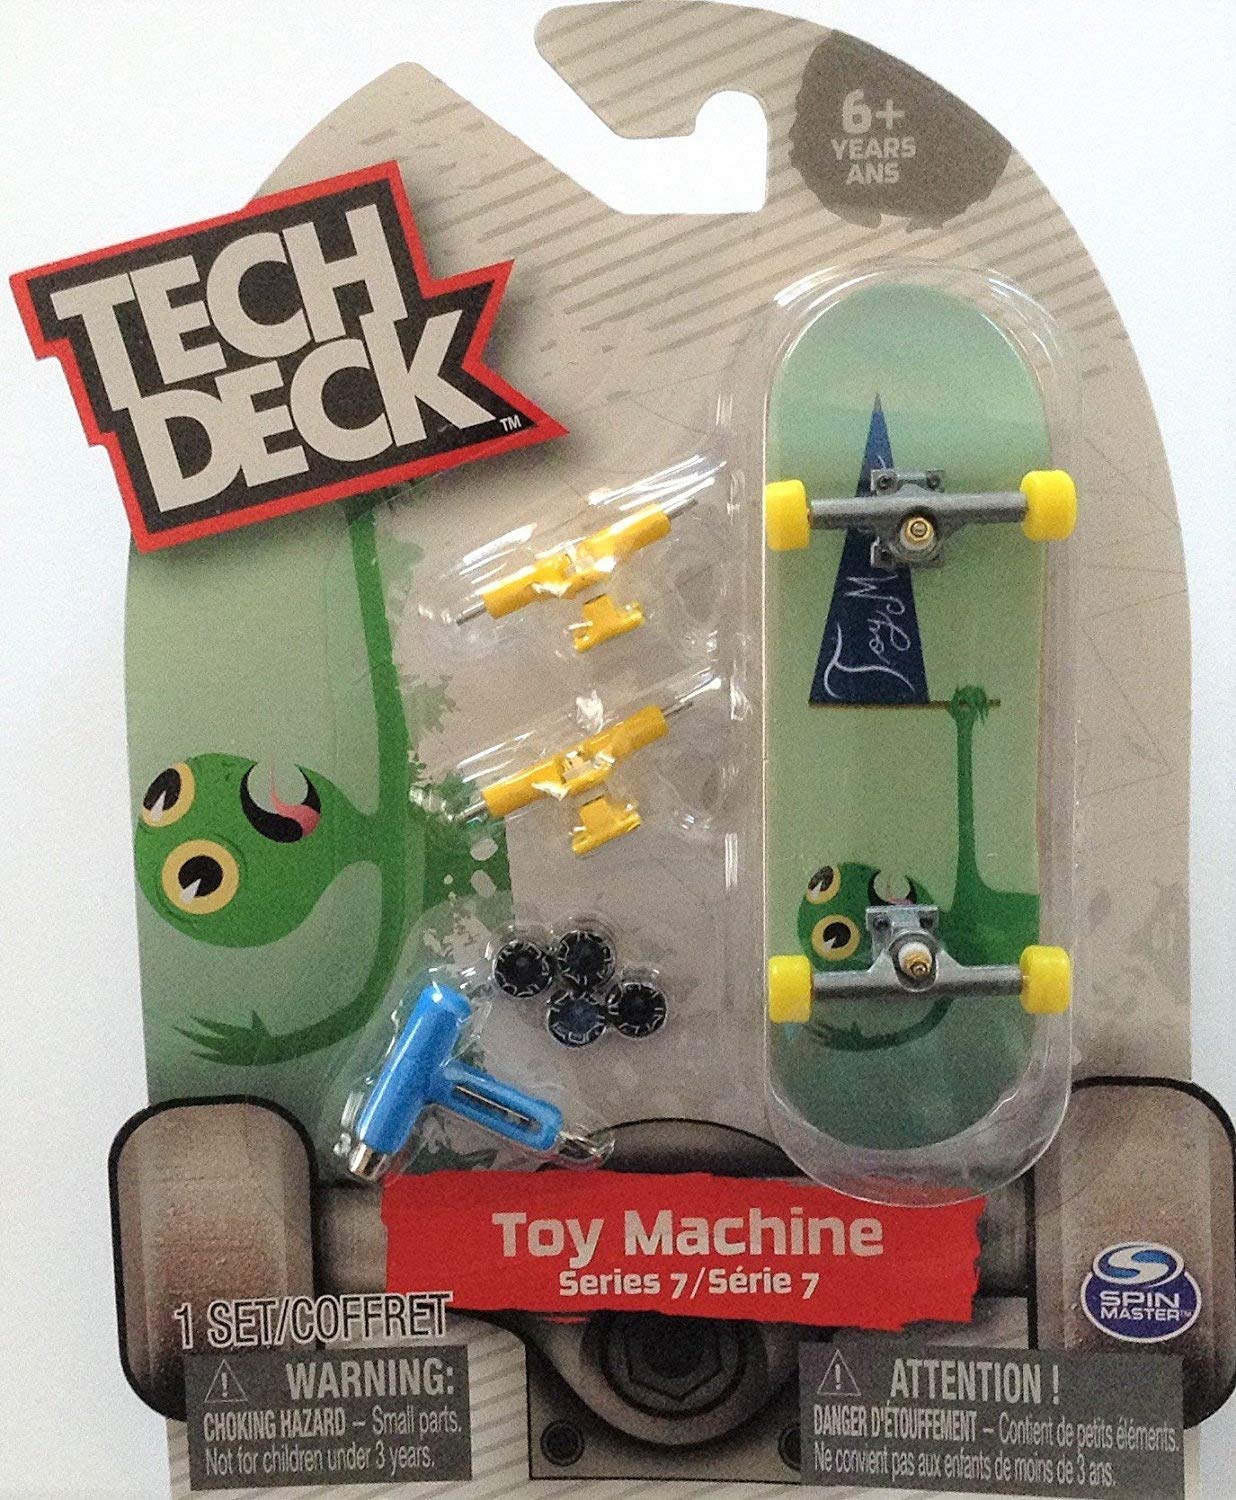 Small Toy Machine Logo - Amazon.com: Tech Deck TOY MACHINE Series 7 Green Turtle Ultra Rare ...